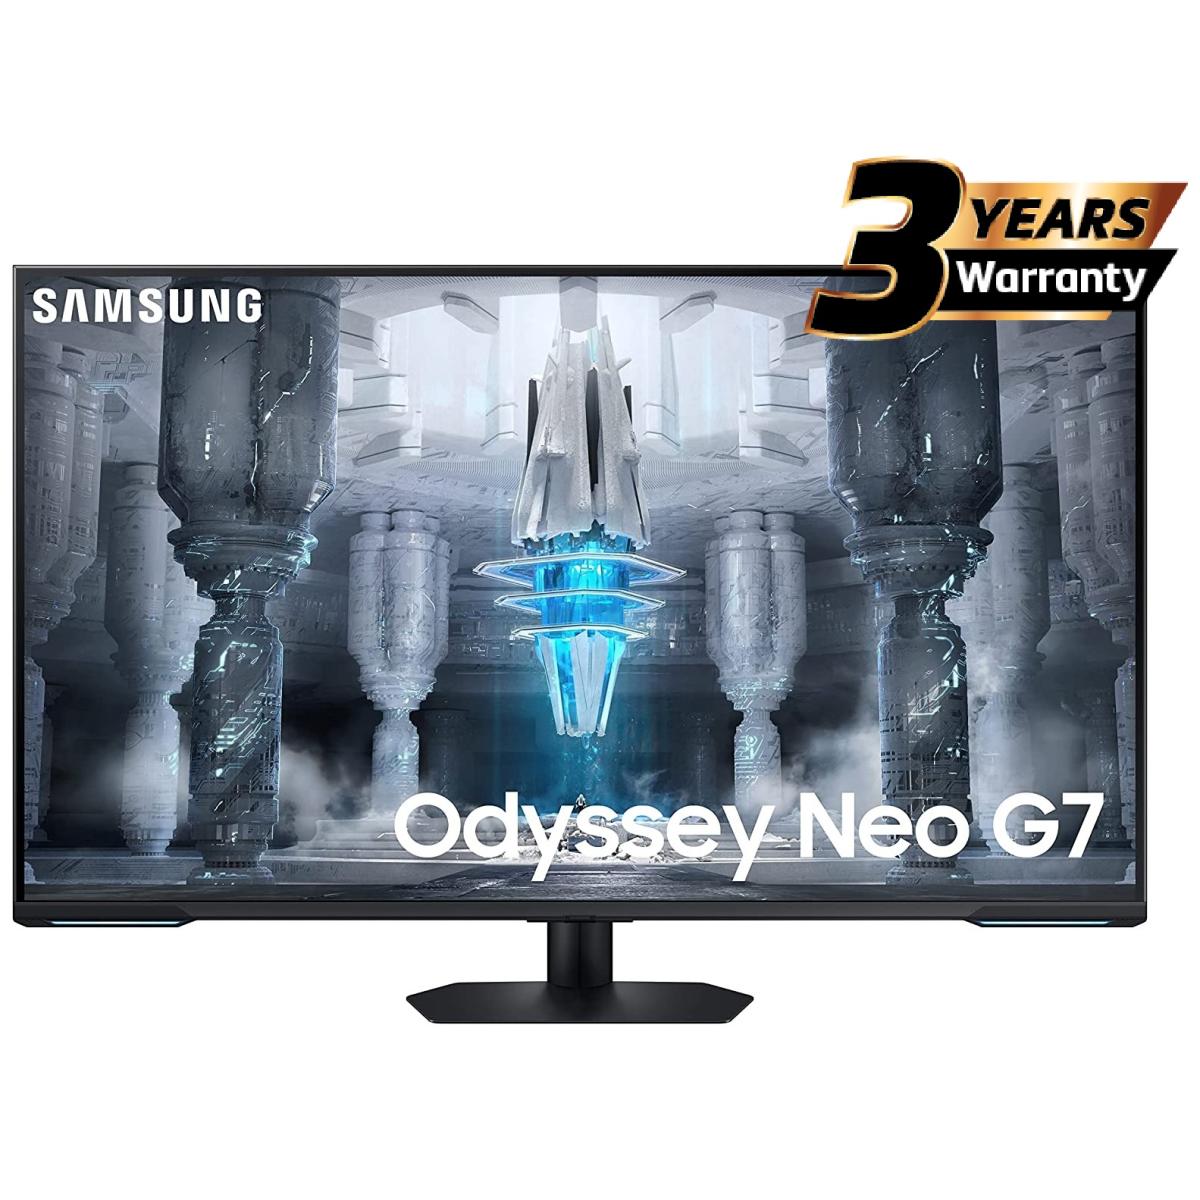 Samsung 43" Odyssey Neo G7 4K UHD 144Hz 1ms VESA Display HDR600 Smart Gaming Monitor